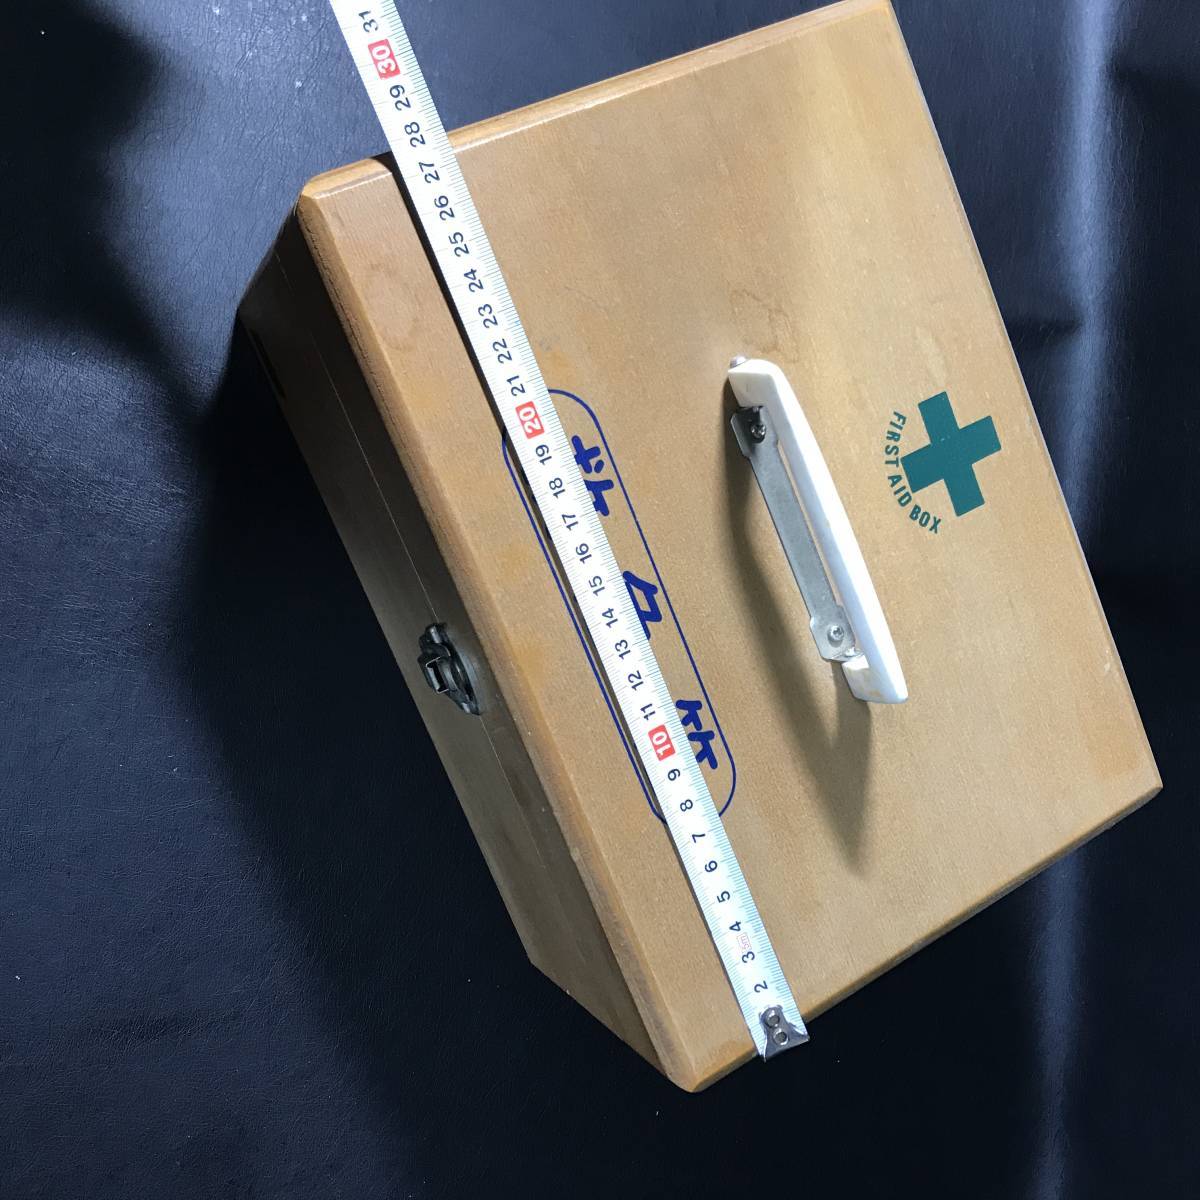 NSD JAPAN TOWA Showa Retro аптечка первой помощи FIRST AID BOX JAPAN VINTAGE